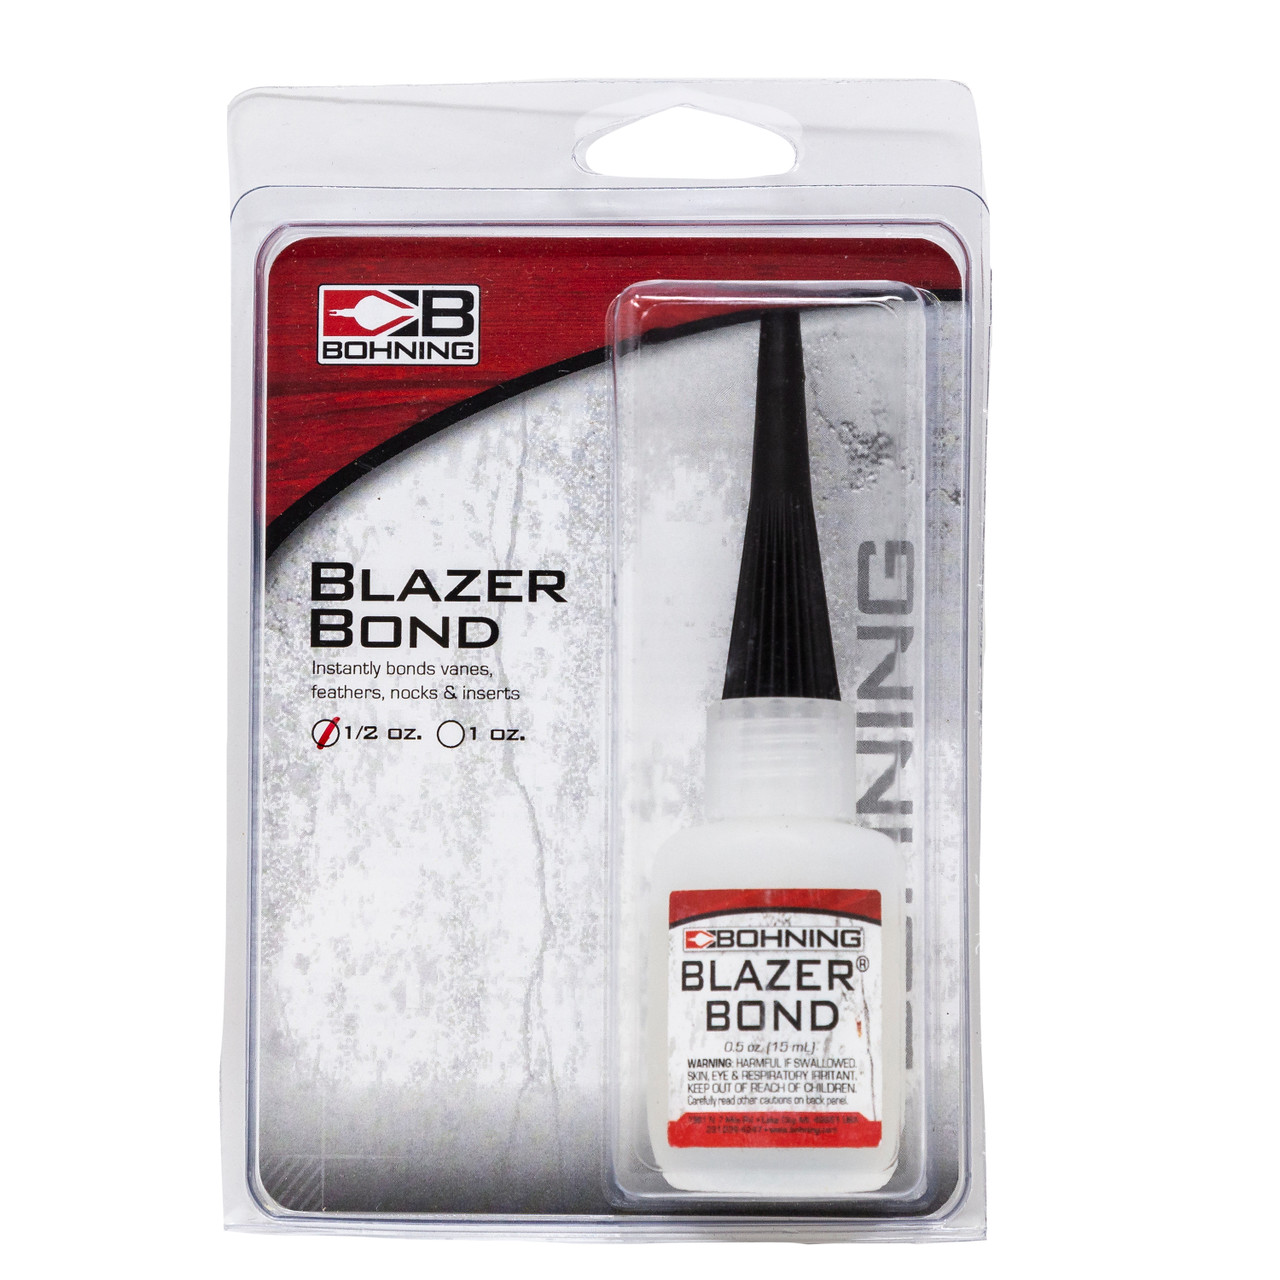 Blazer® Bond